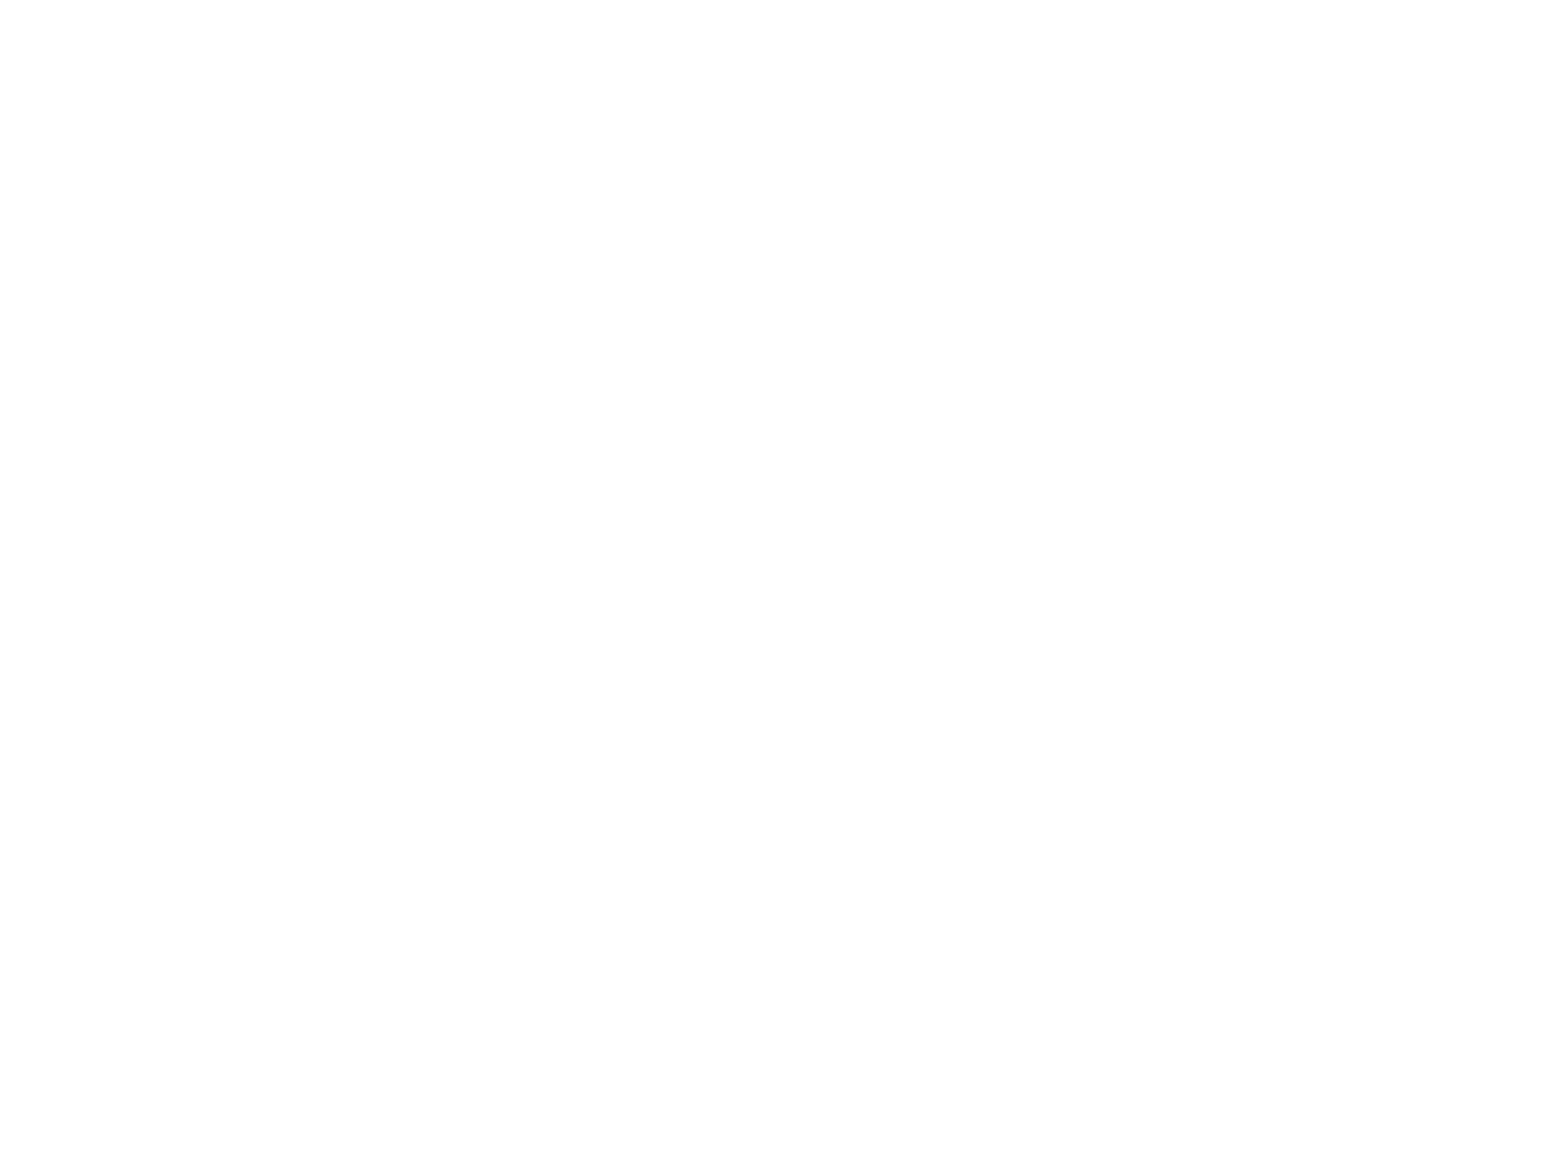 Computacenter logo pour fonds sombres (PNG transparent)